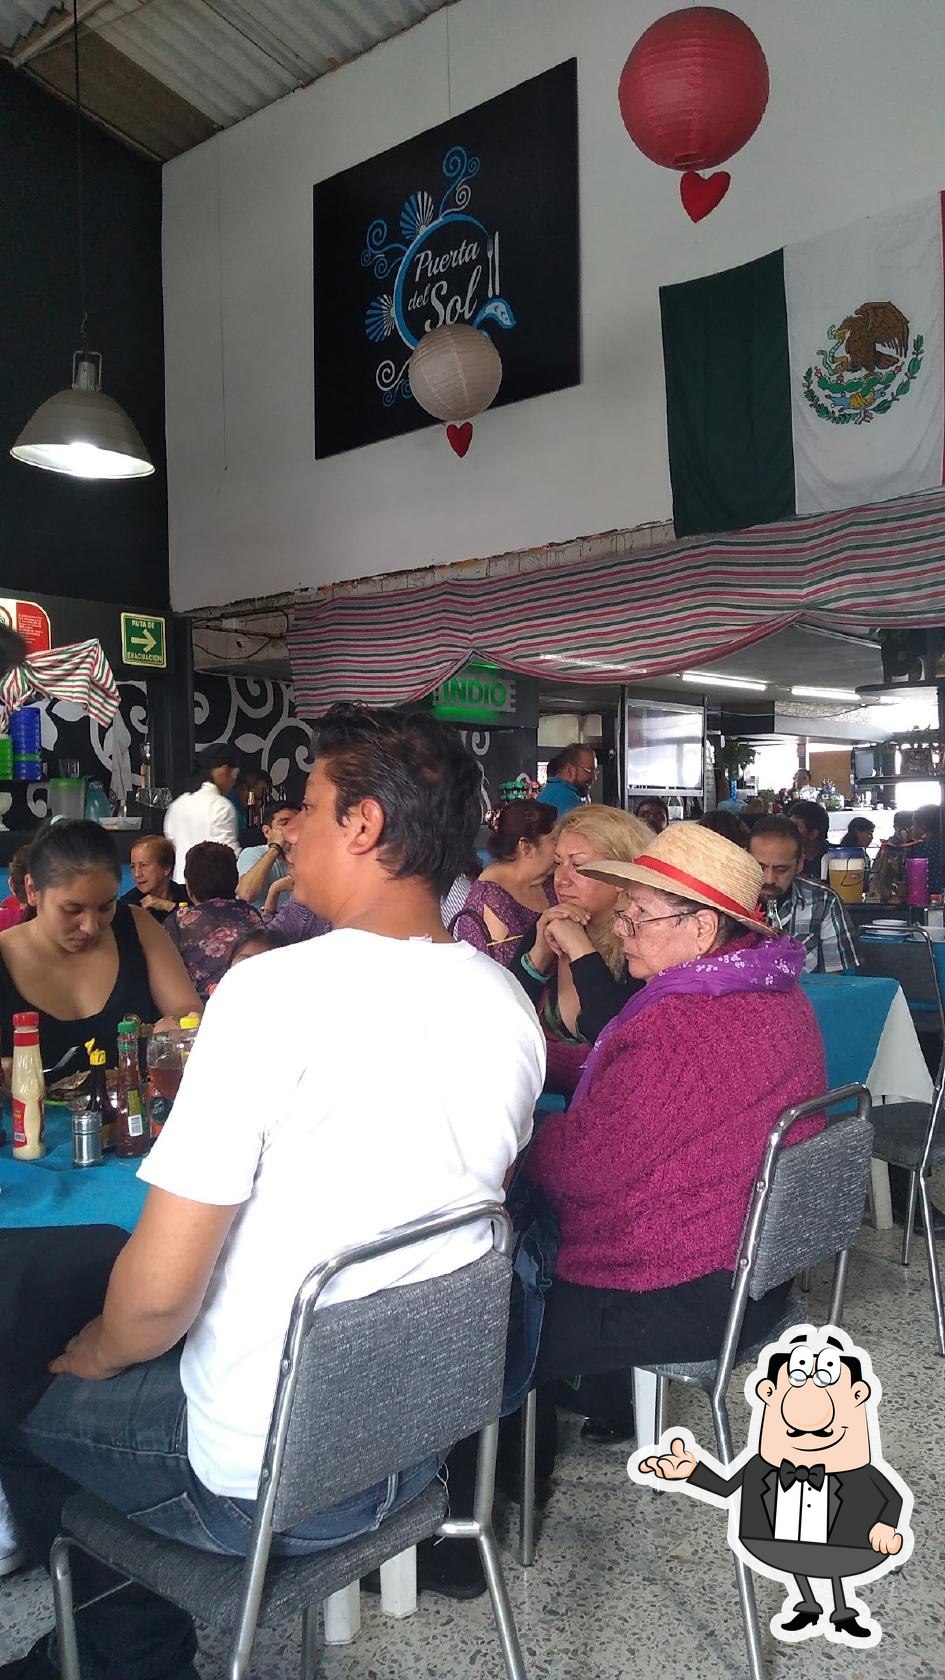 Mariscos Playa del Sol restaurant, Mexico - Restaurant reviews